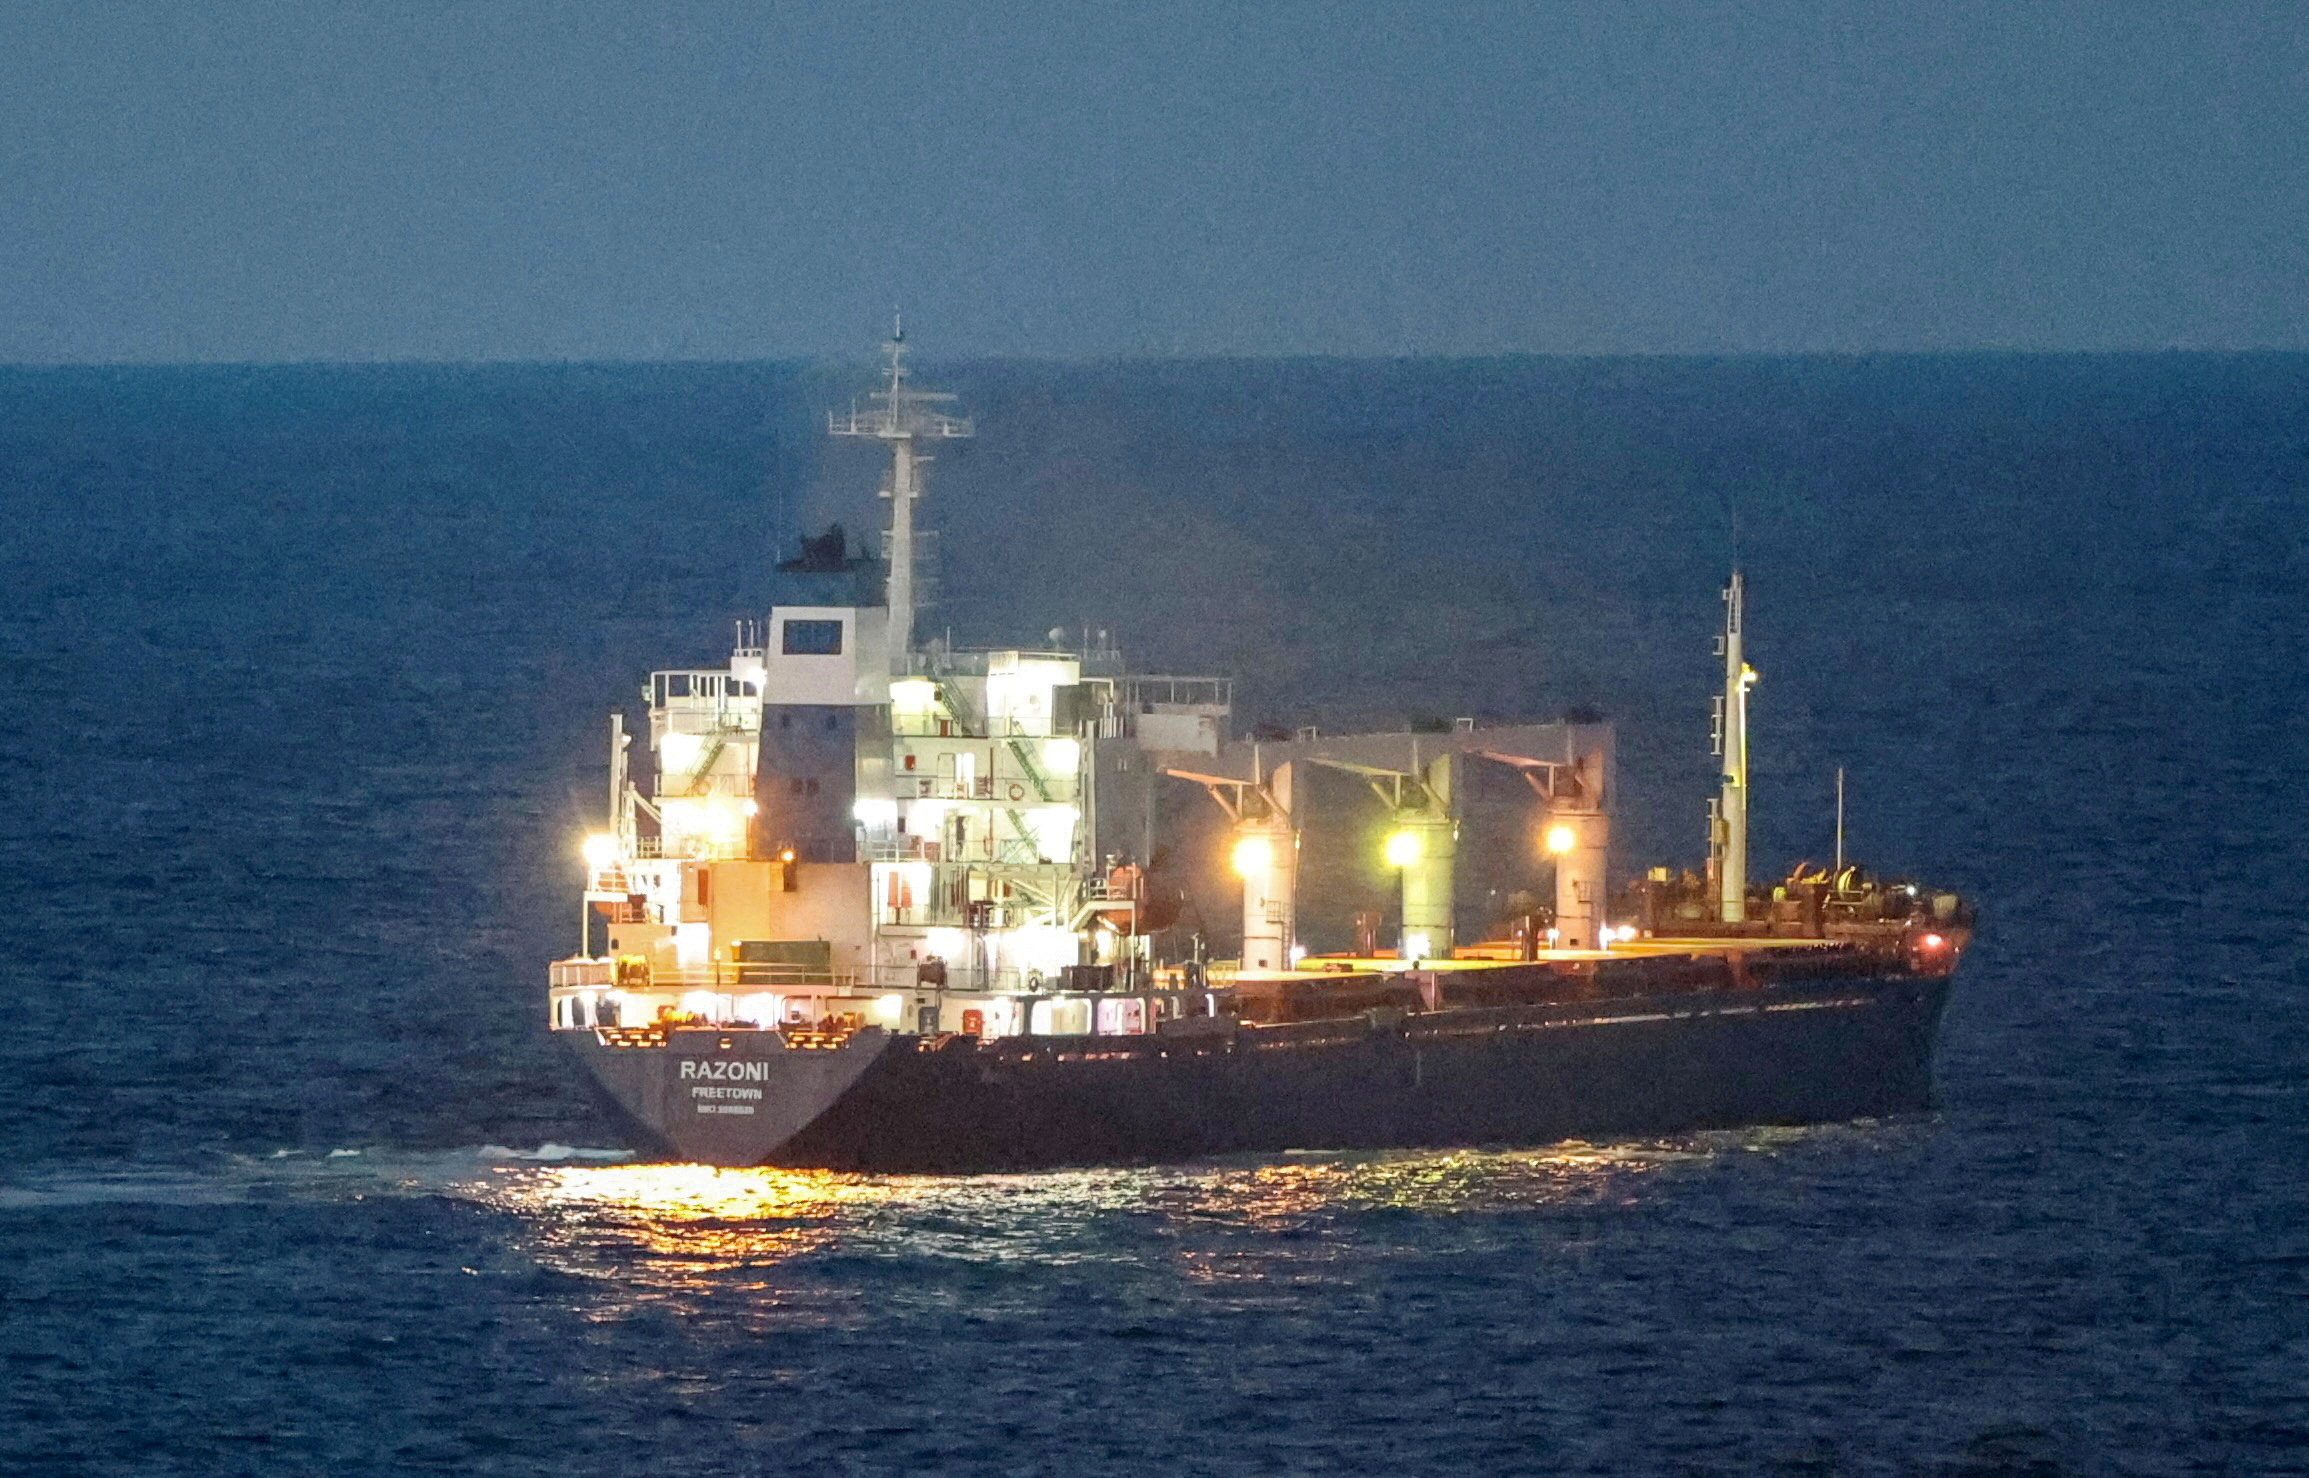 The Sierra Leone-flagged cargo ship Razoni, carrying Ukrainian grain, is seen in the Black Sea off Kilyos, near Istanbul